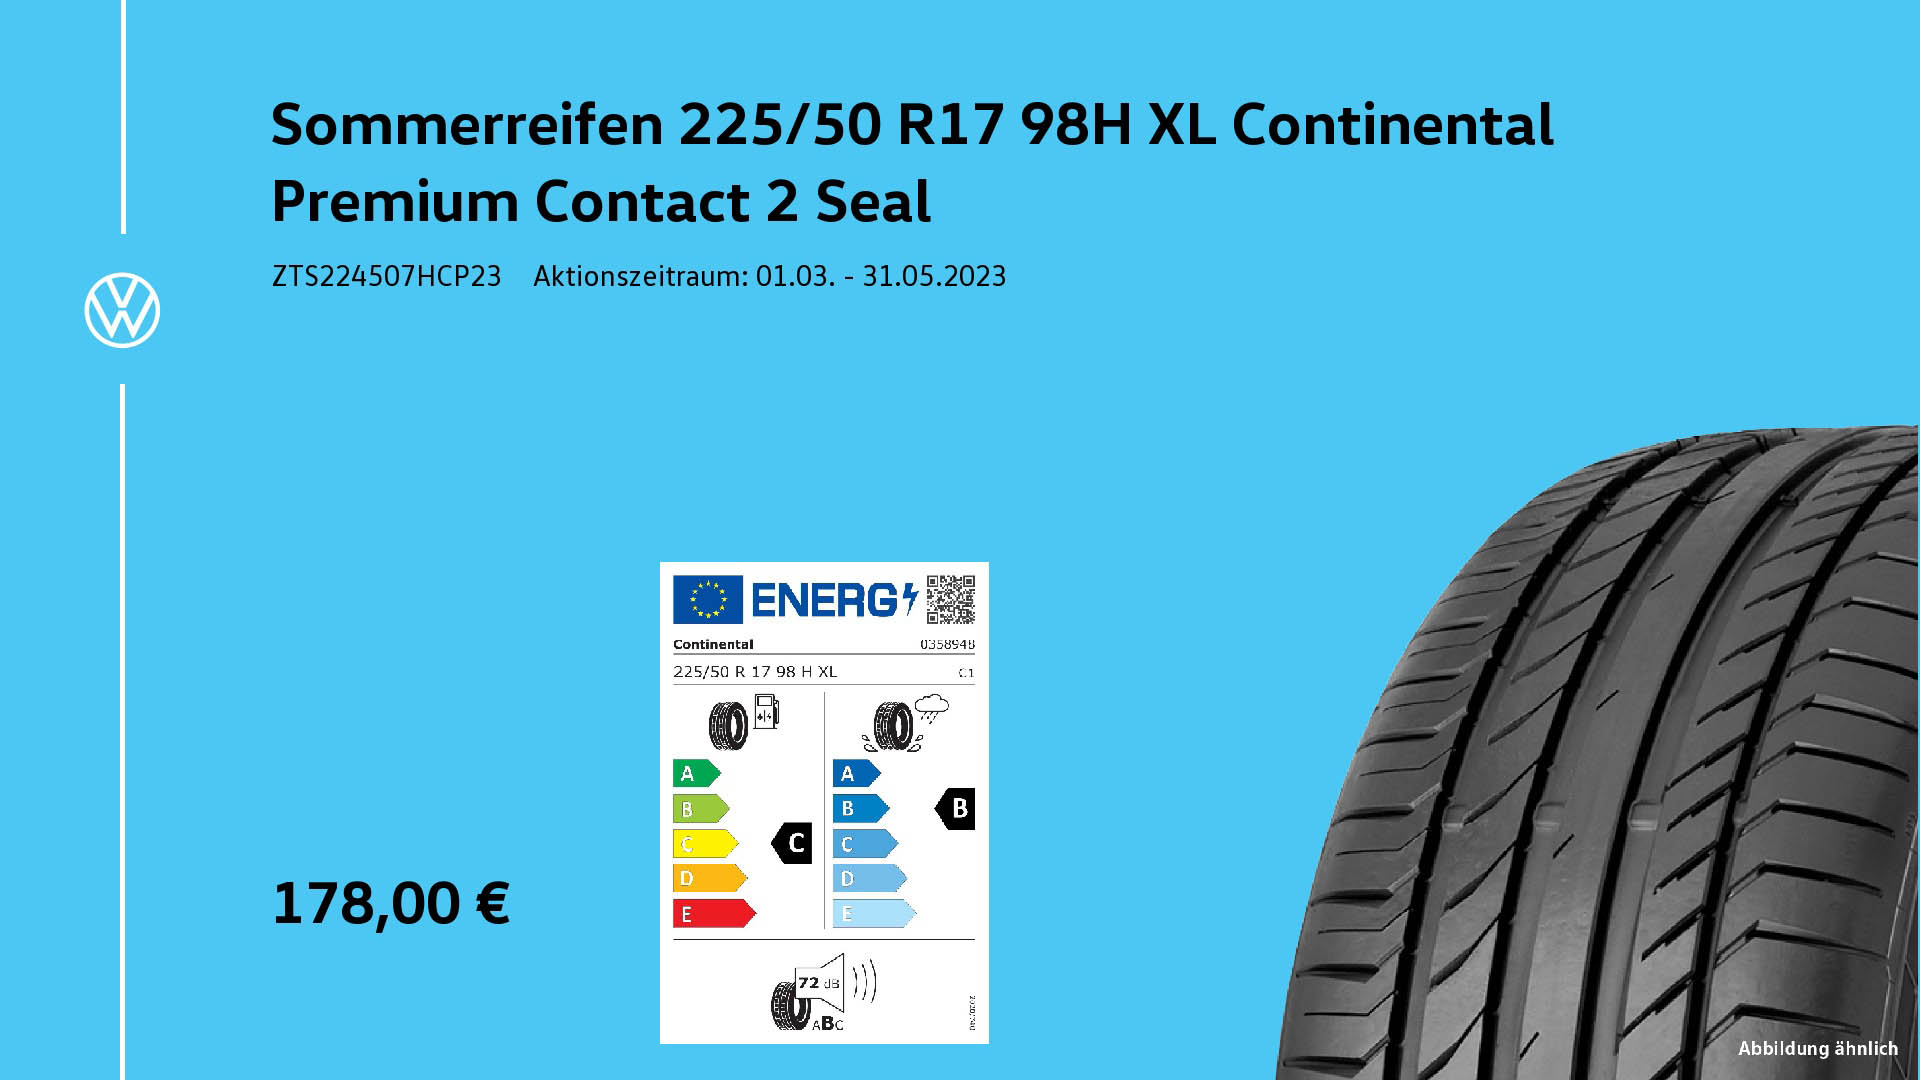 S258ommerreifen Continental Premium Contact2 Seal